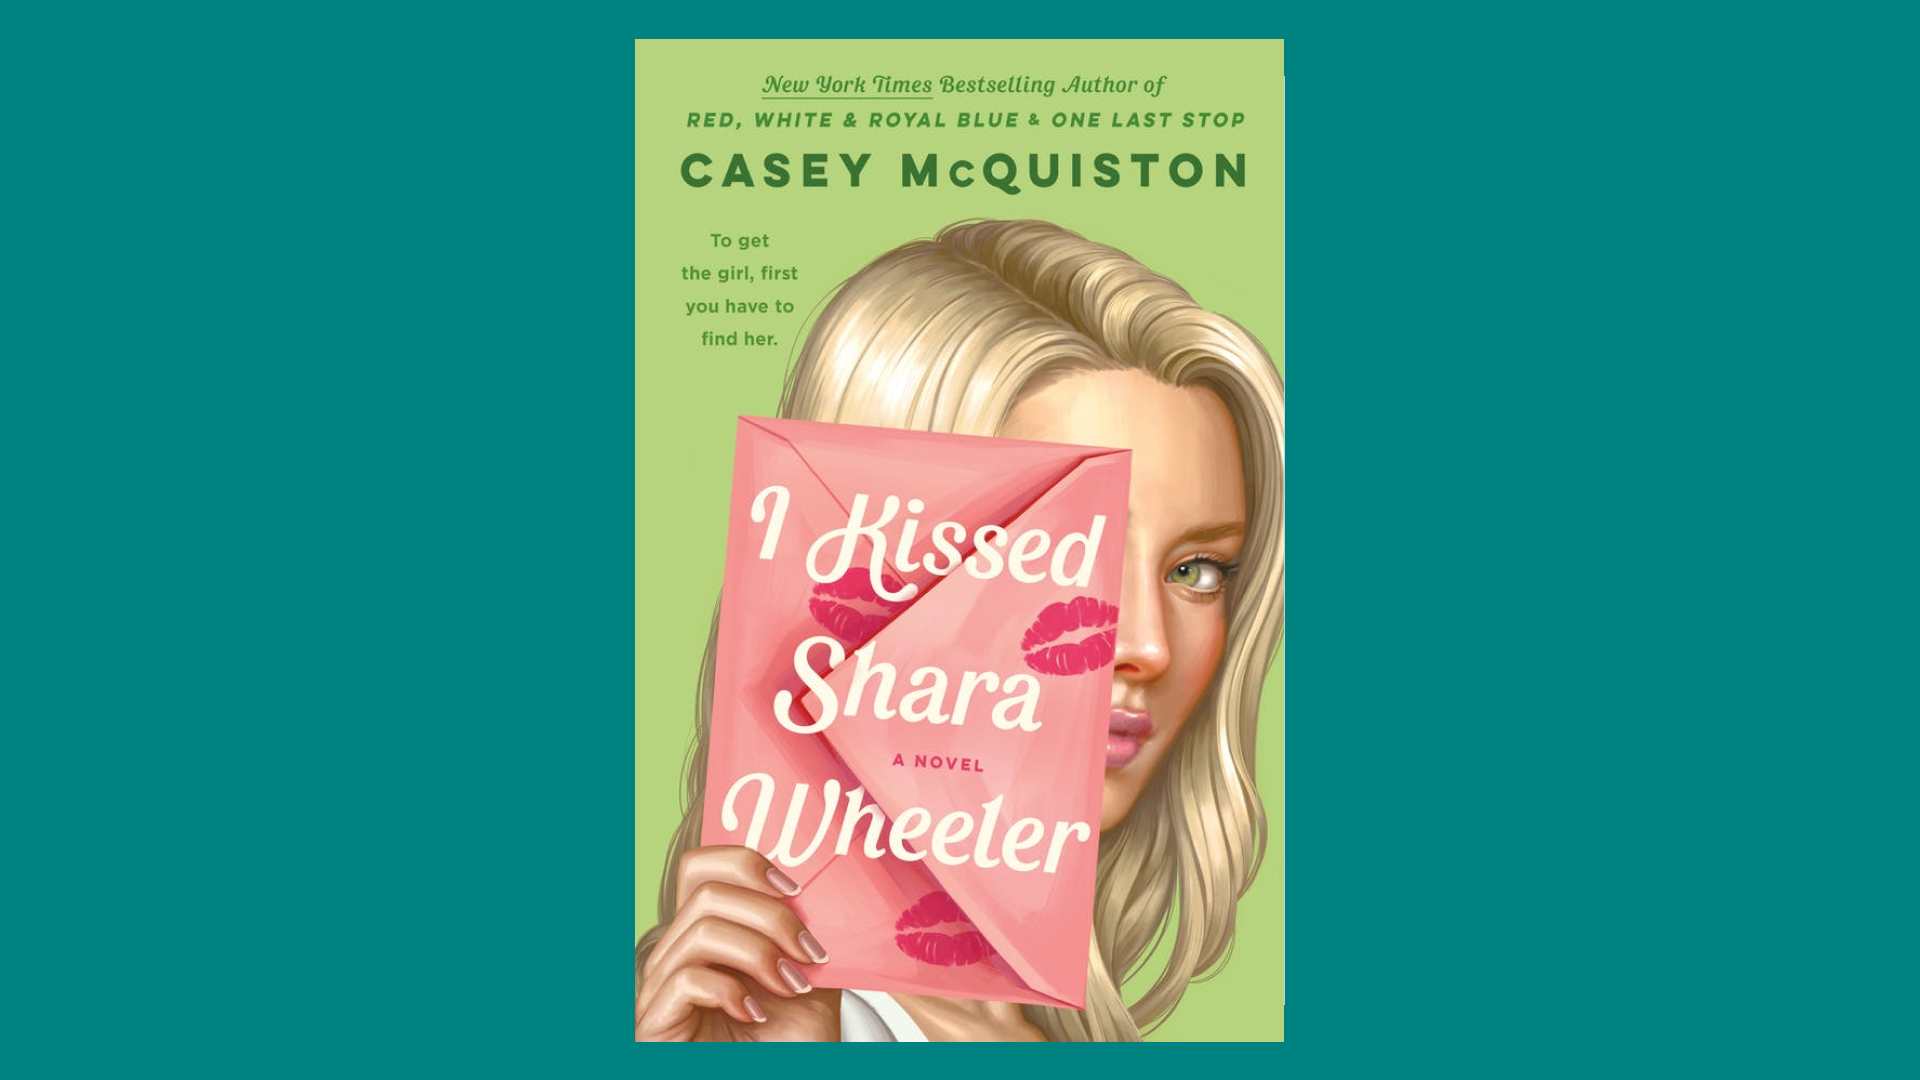 “I Kissed Shara Wheeler” by Casey McQuiston